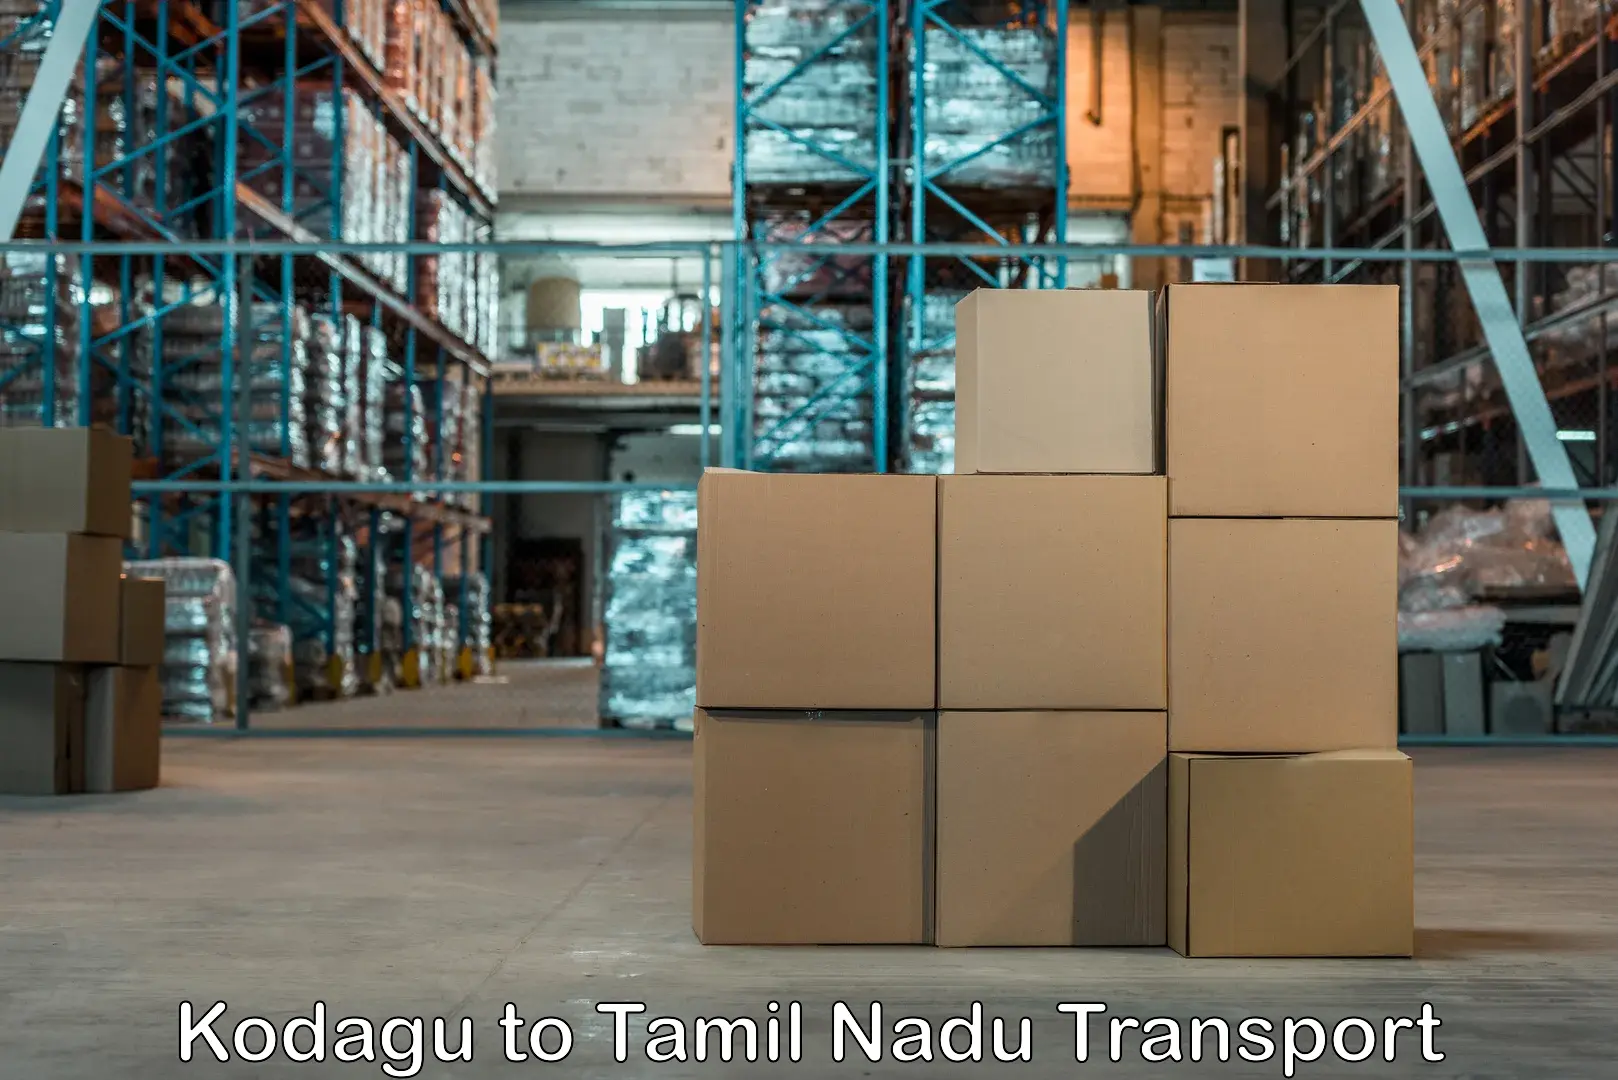 Transport in sharing Kodagu to Tamil Nadu